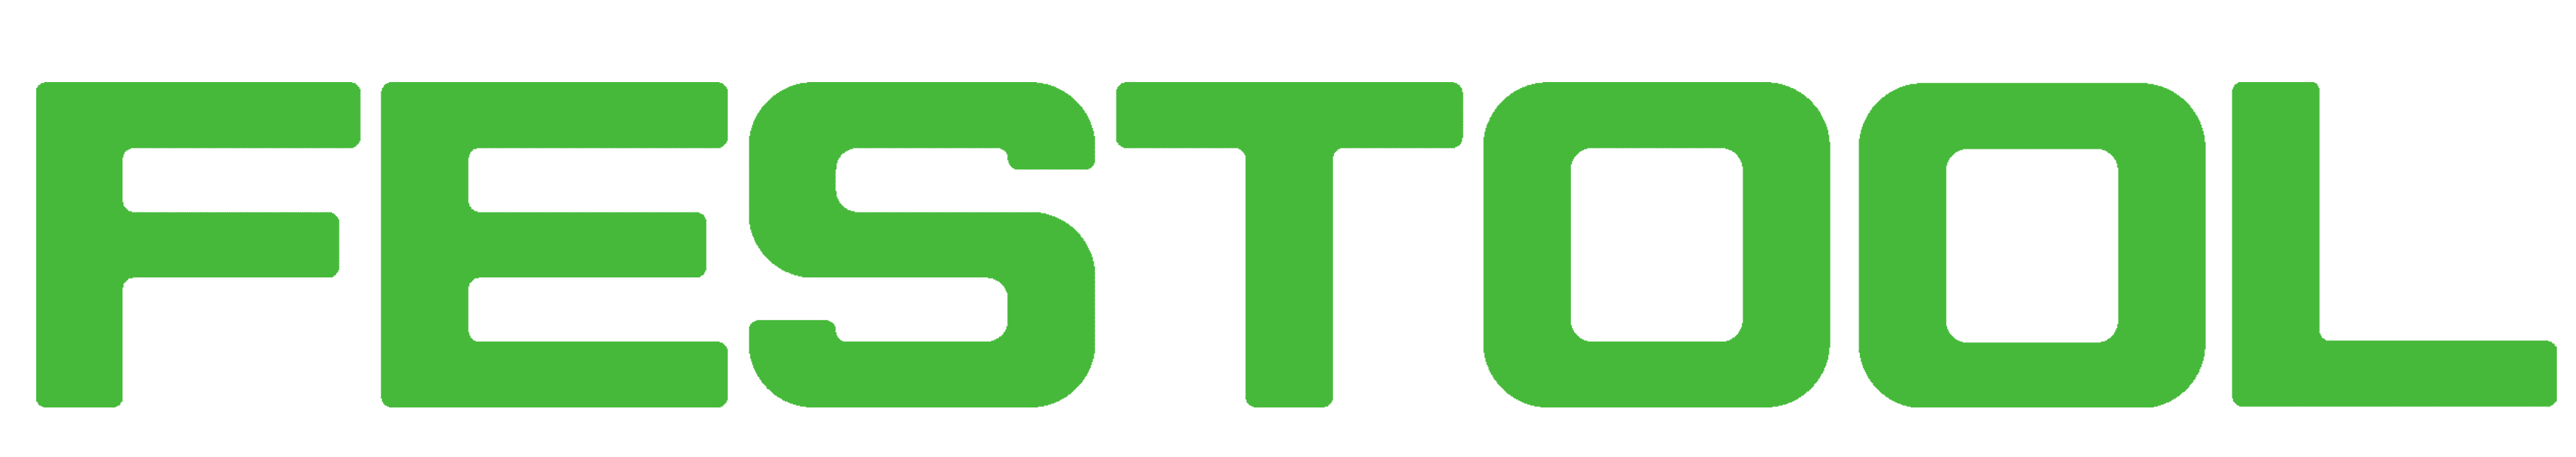 Festool-logo